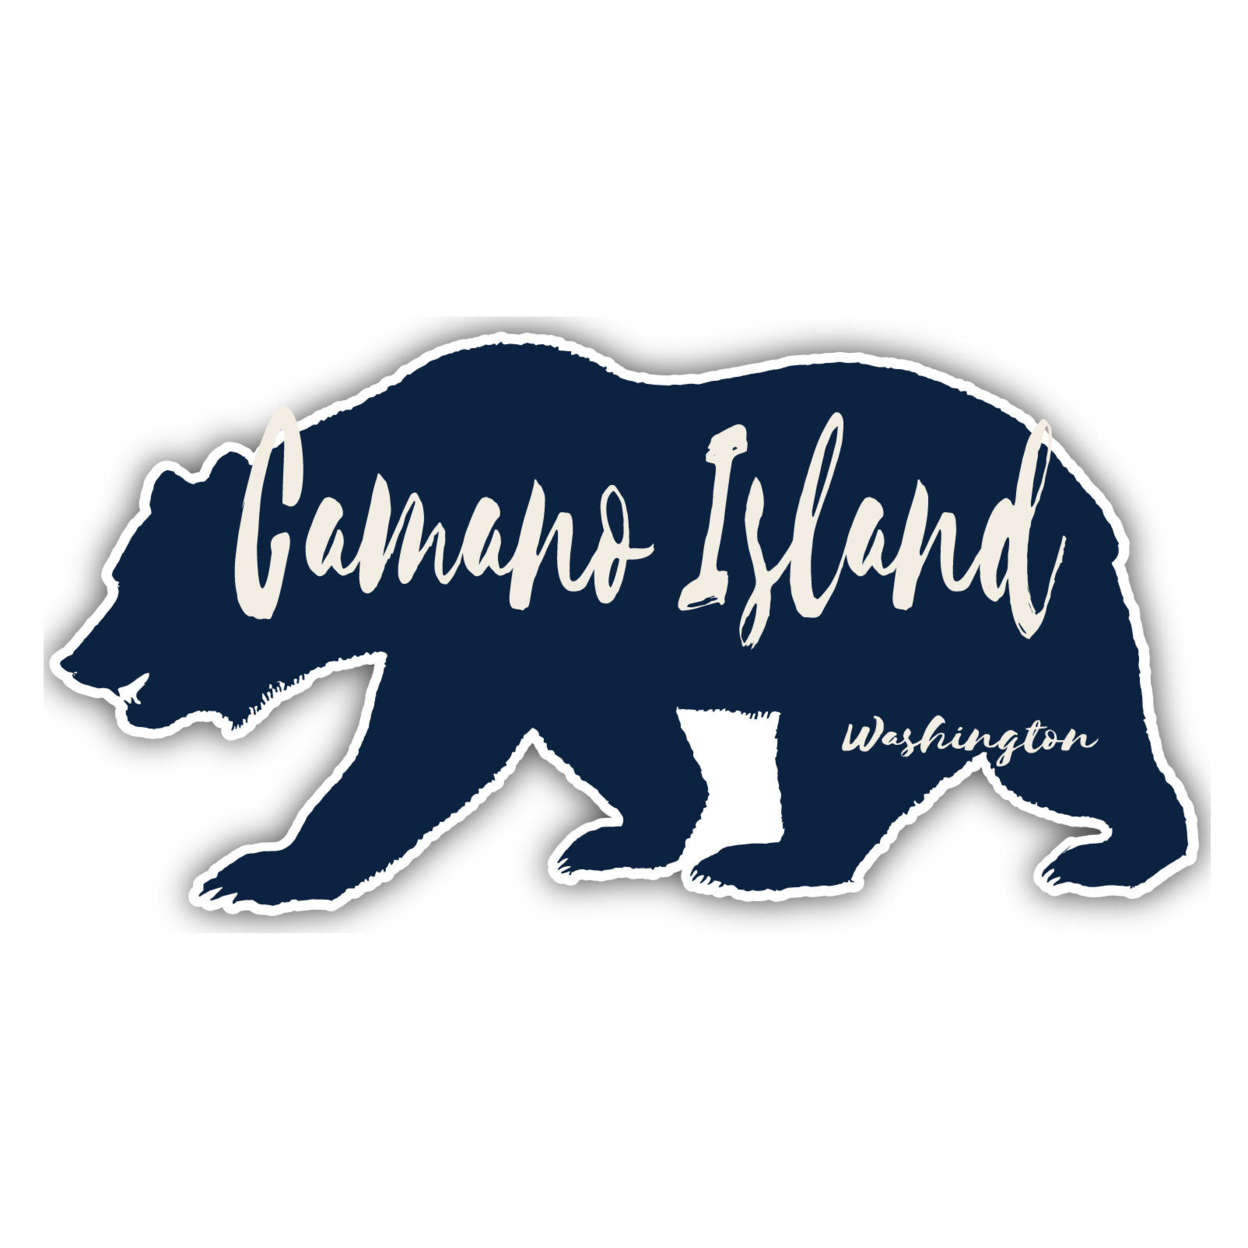 Camano Island Washington Souvenir Decorative Stickers (Choose Theme And Size) - Single Unit, 4-Inch, Tent